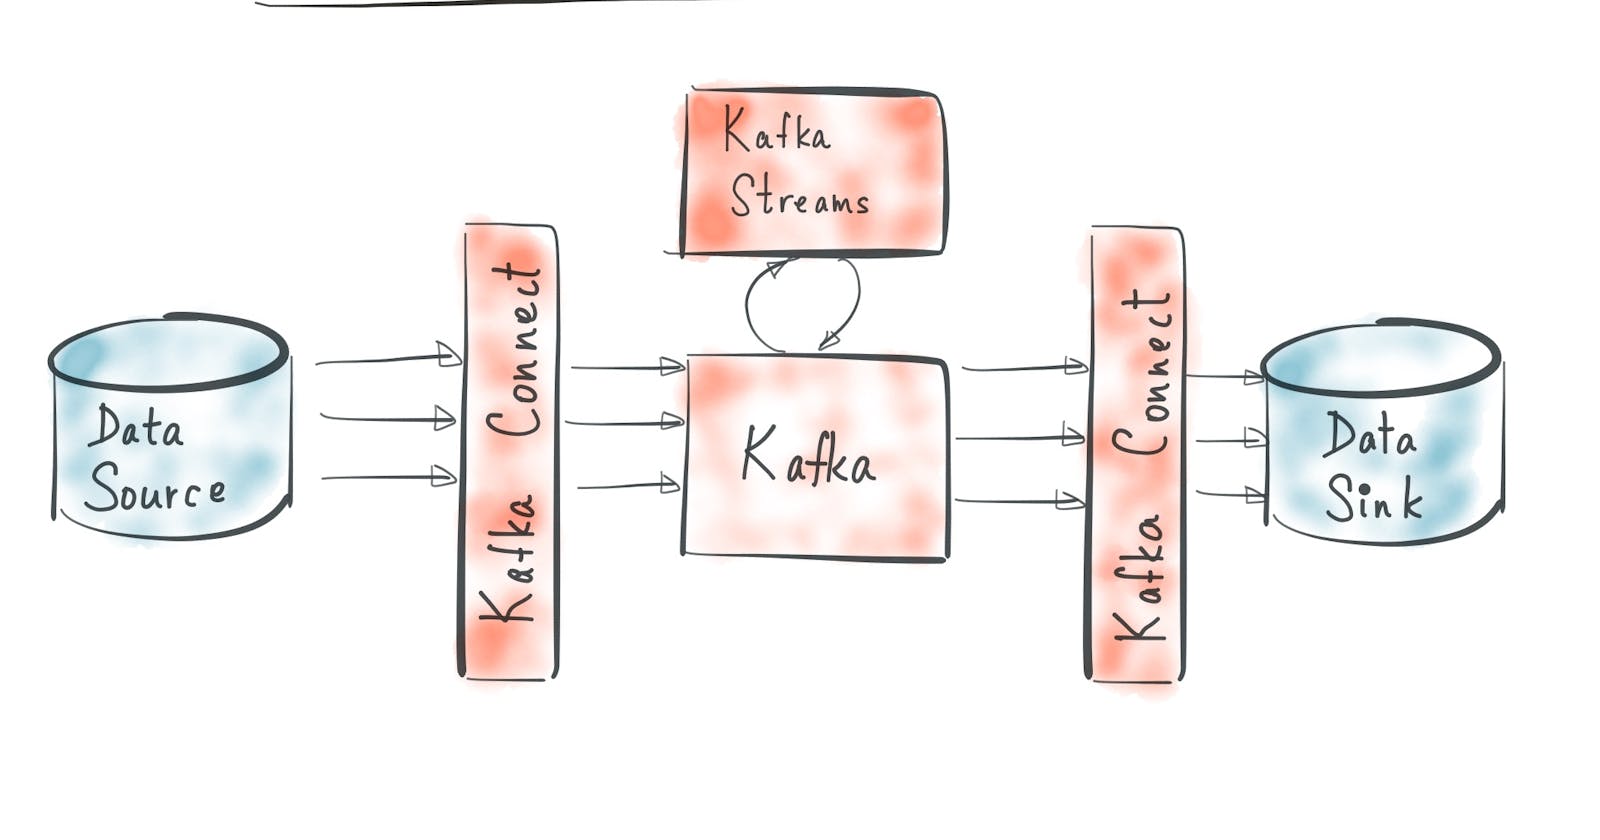 Kafka streams là gì?